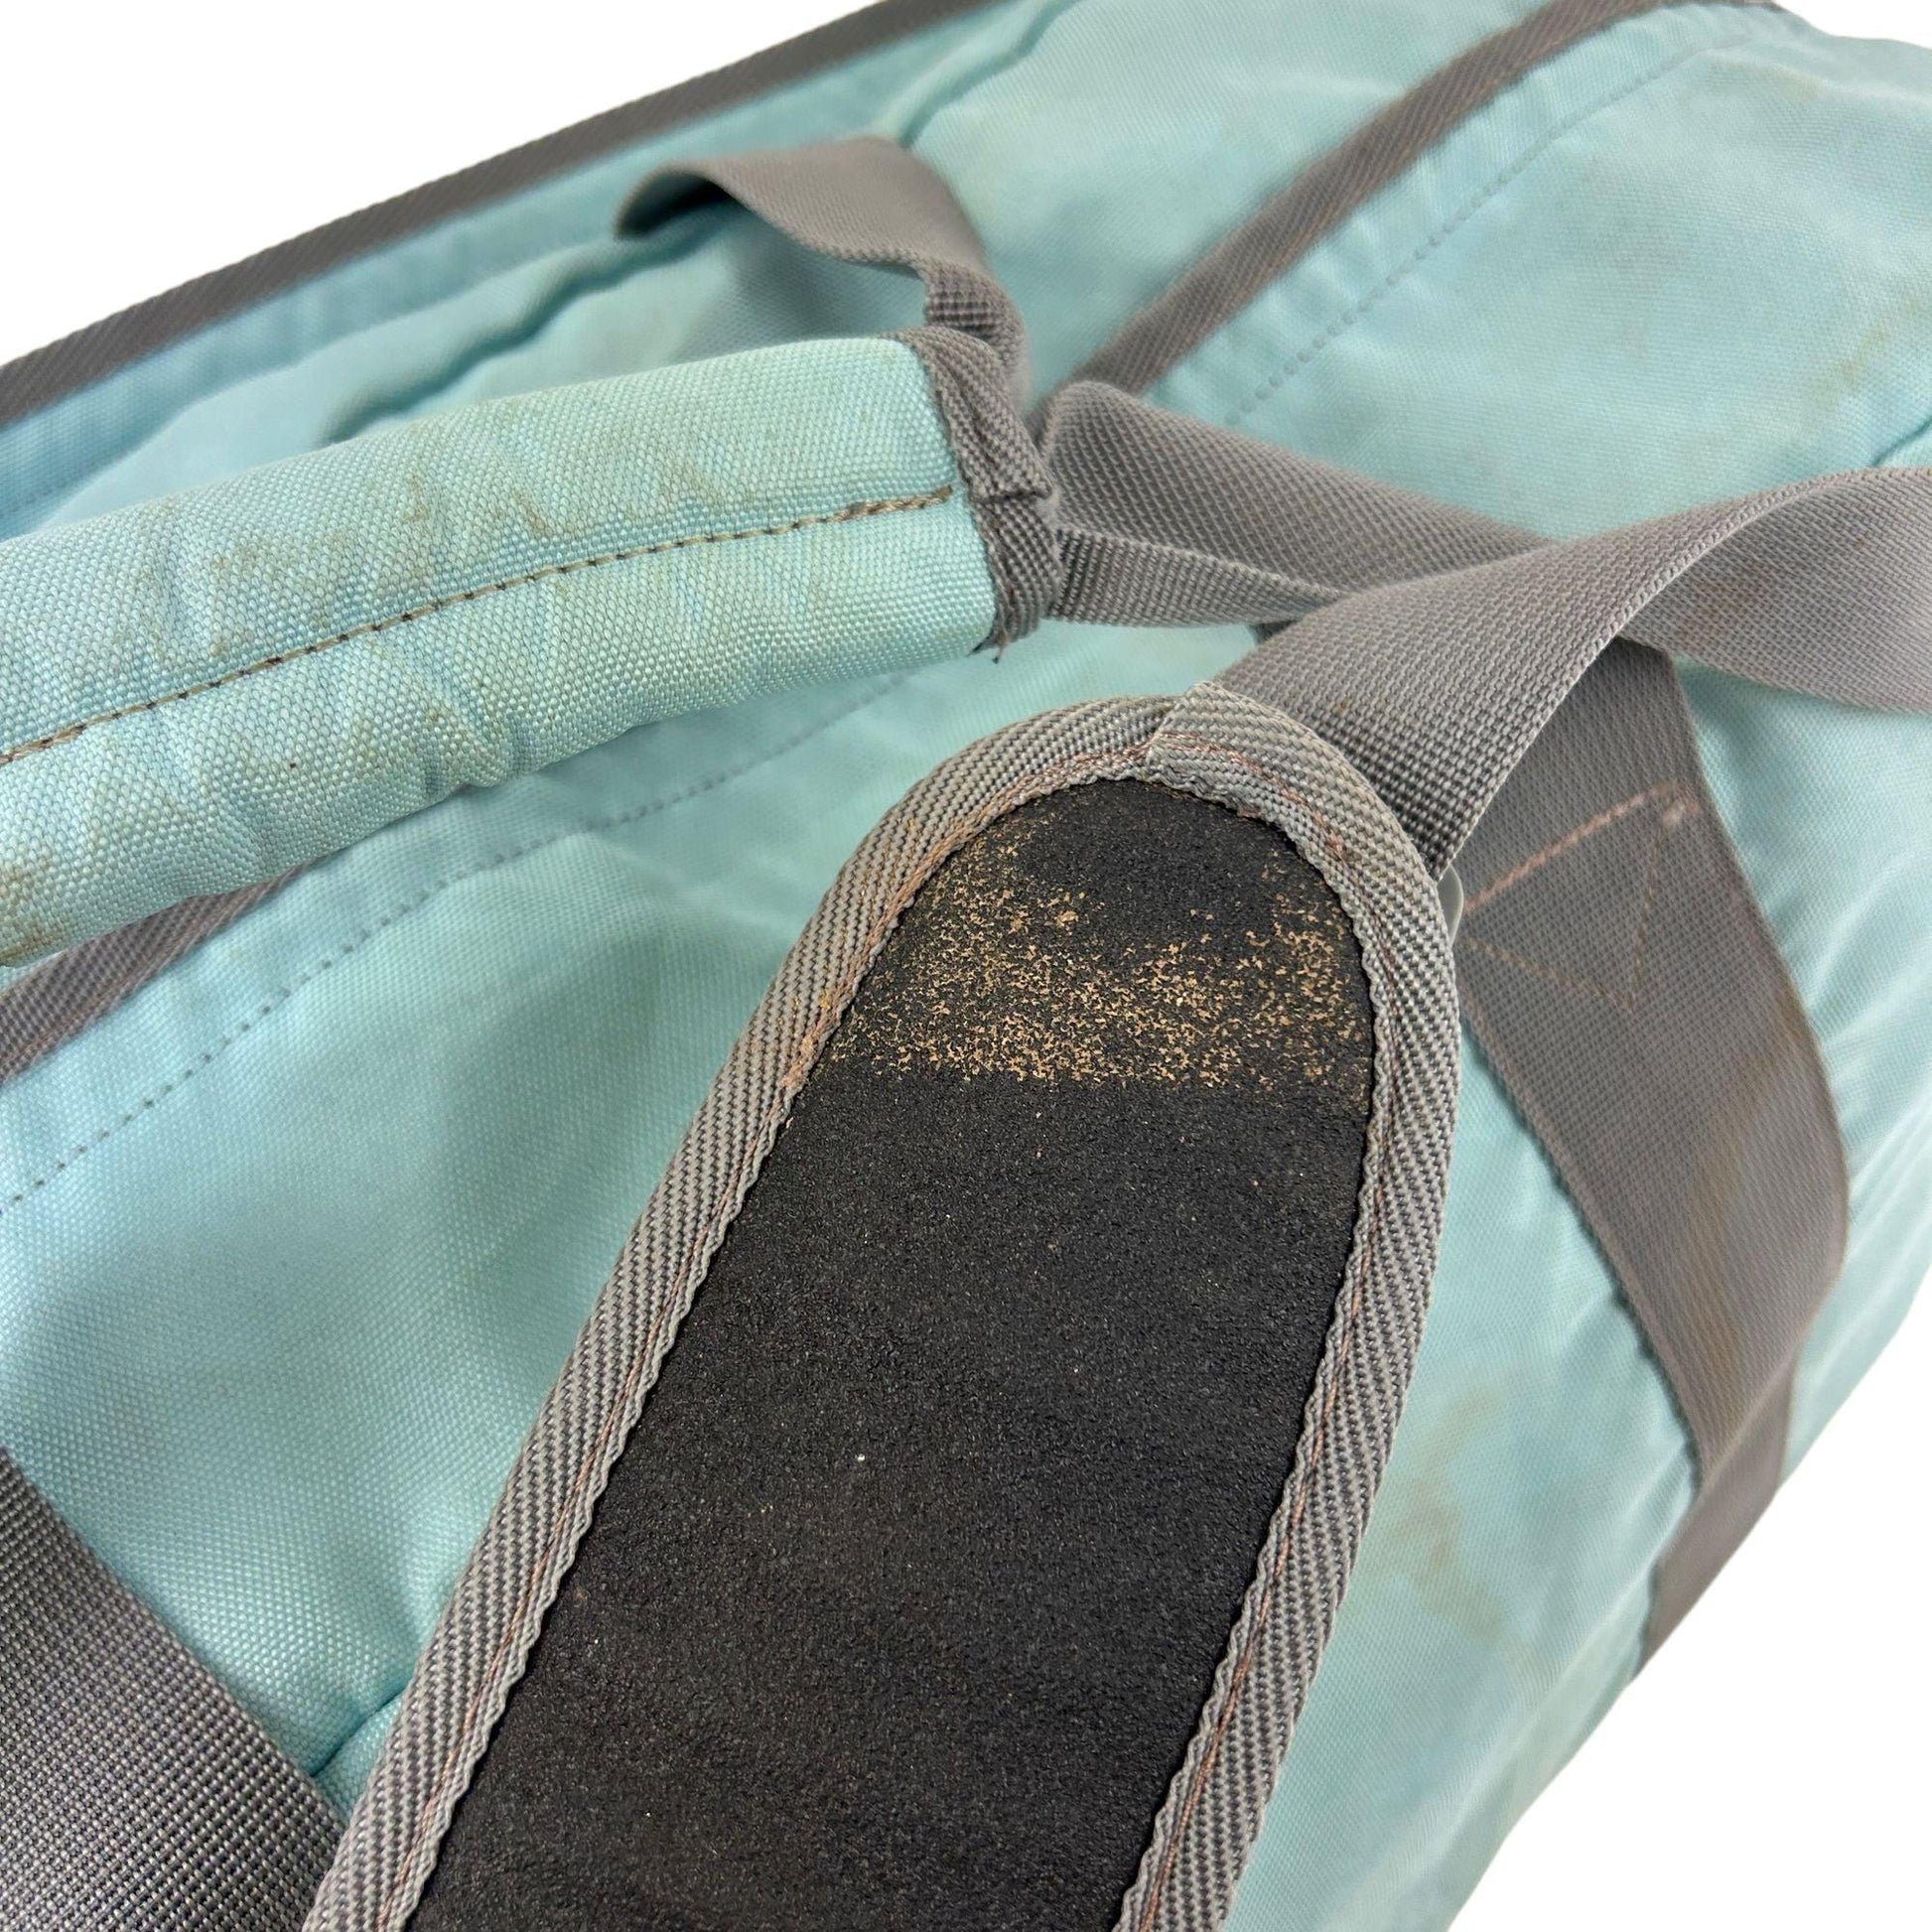 Vintage Nike Duffle Bag - Known Source